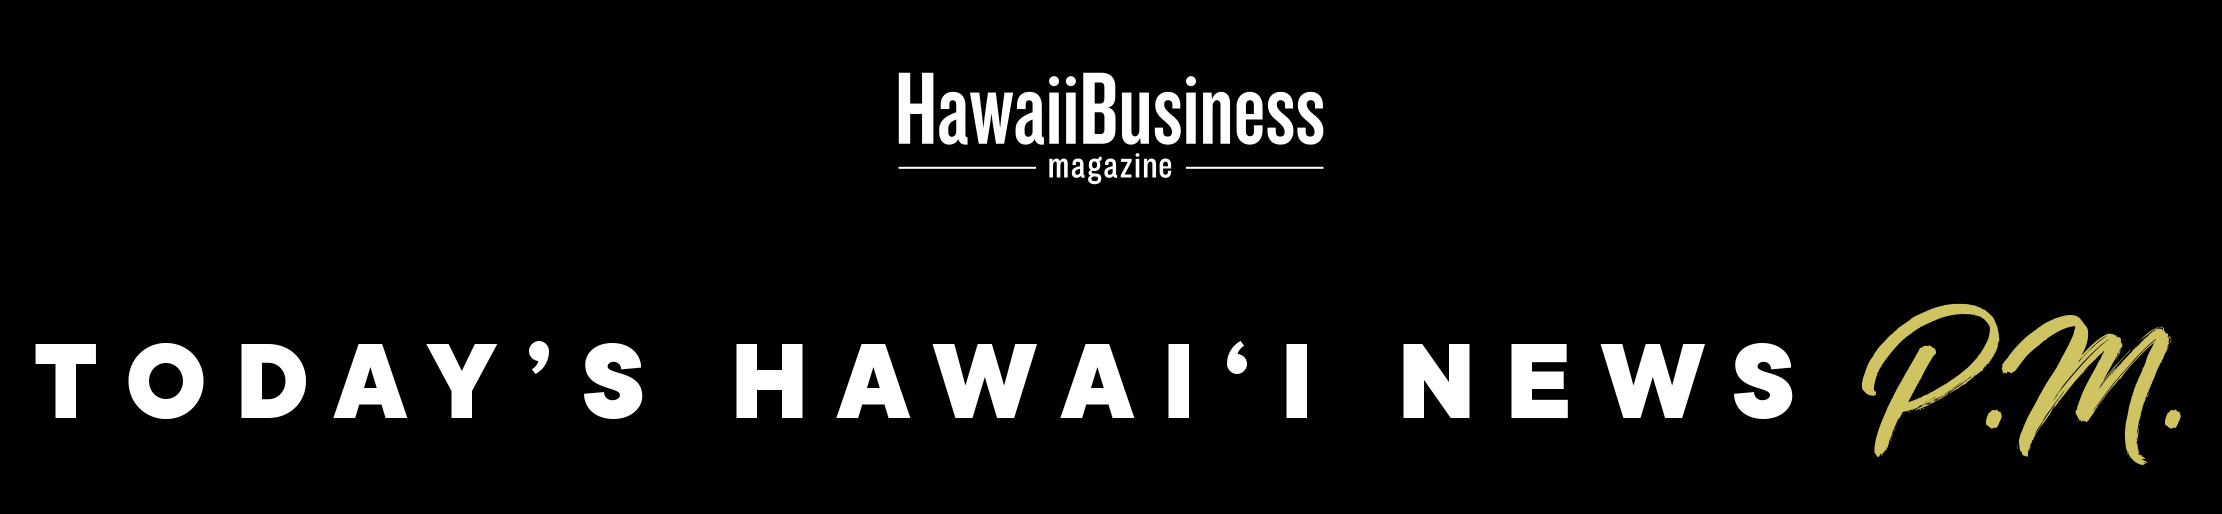 Today's Hawaiʻi News P.M.